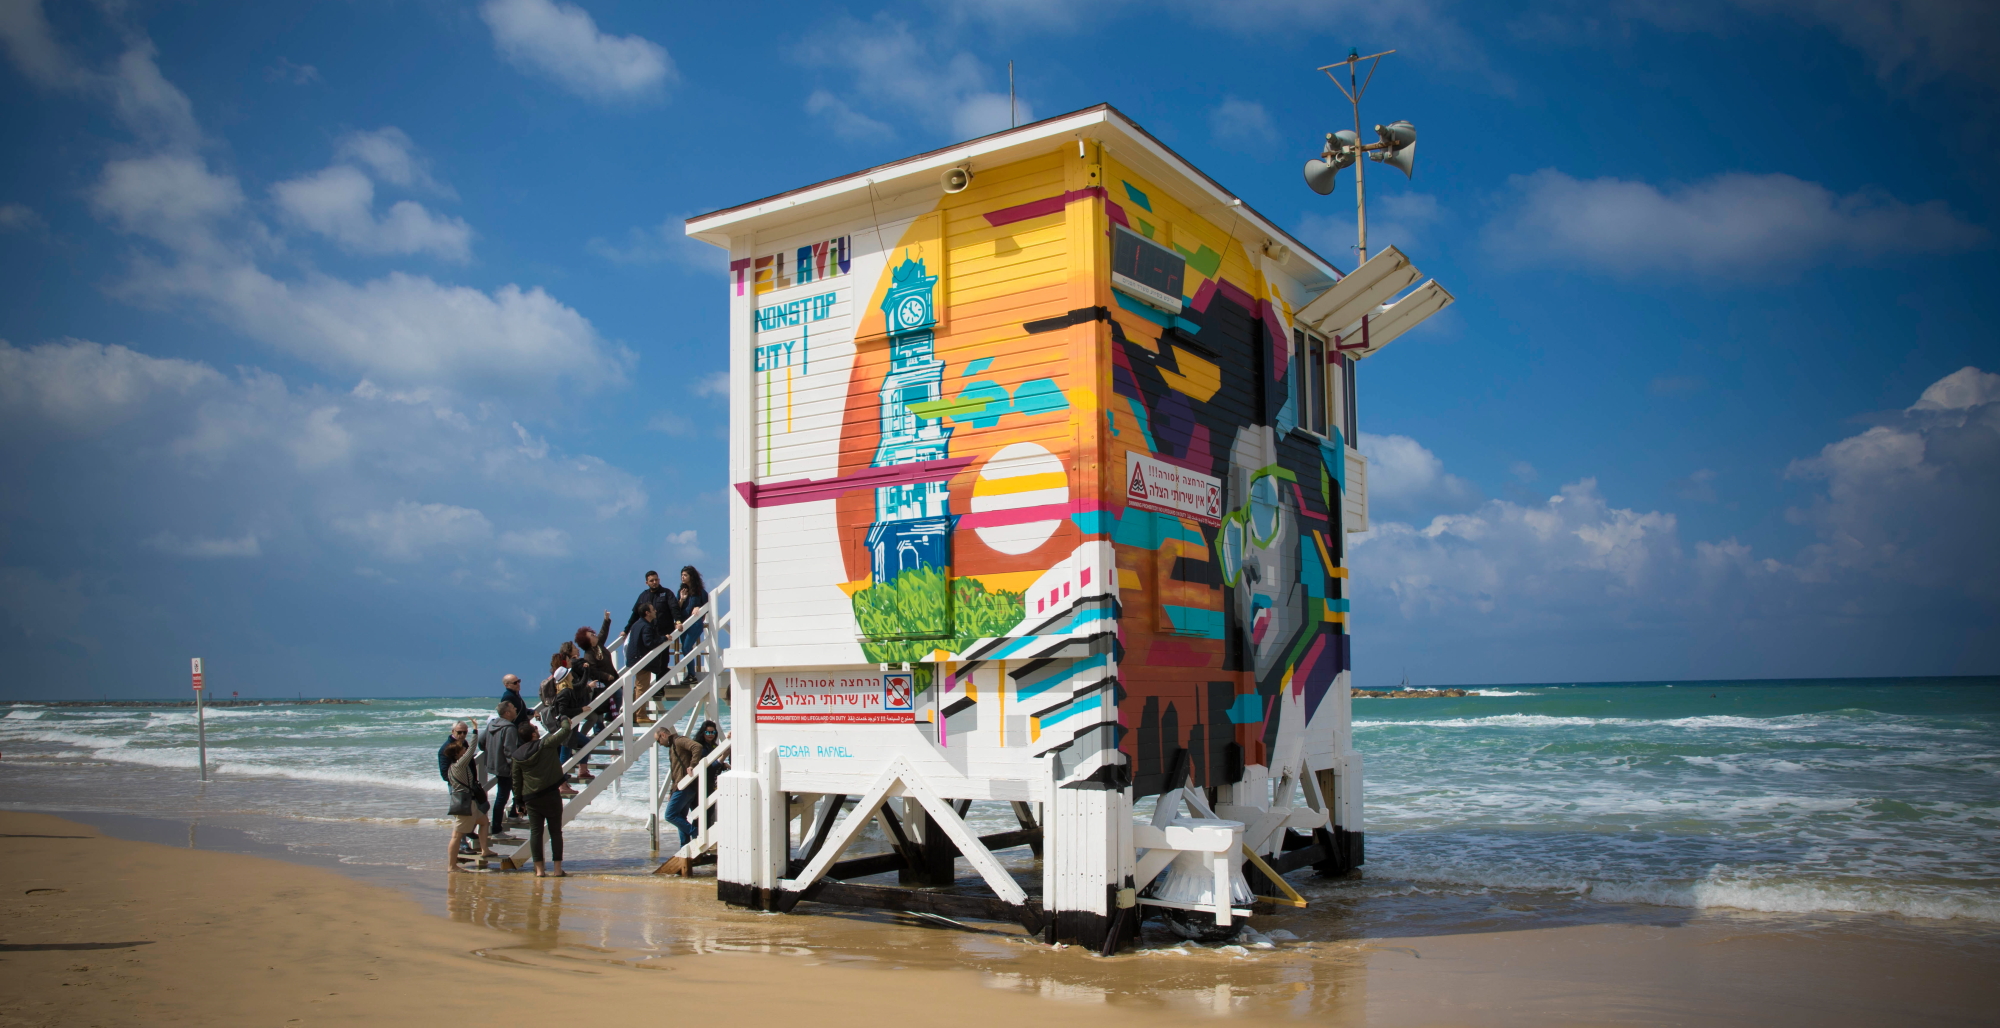 Pop-Up Lifeguard Tower Hotel Opens on Tel Aviv Beach in Israel